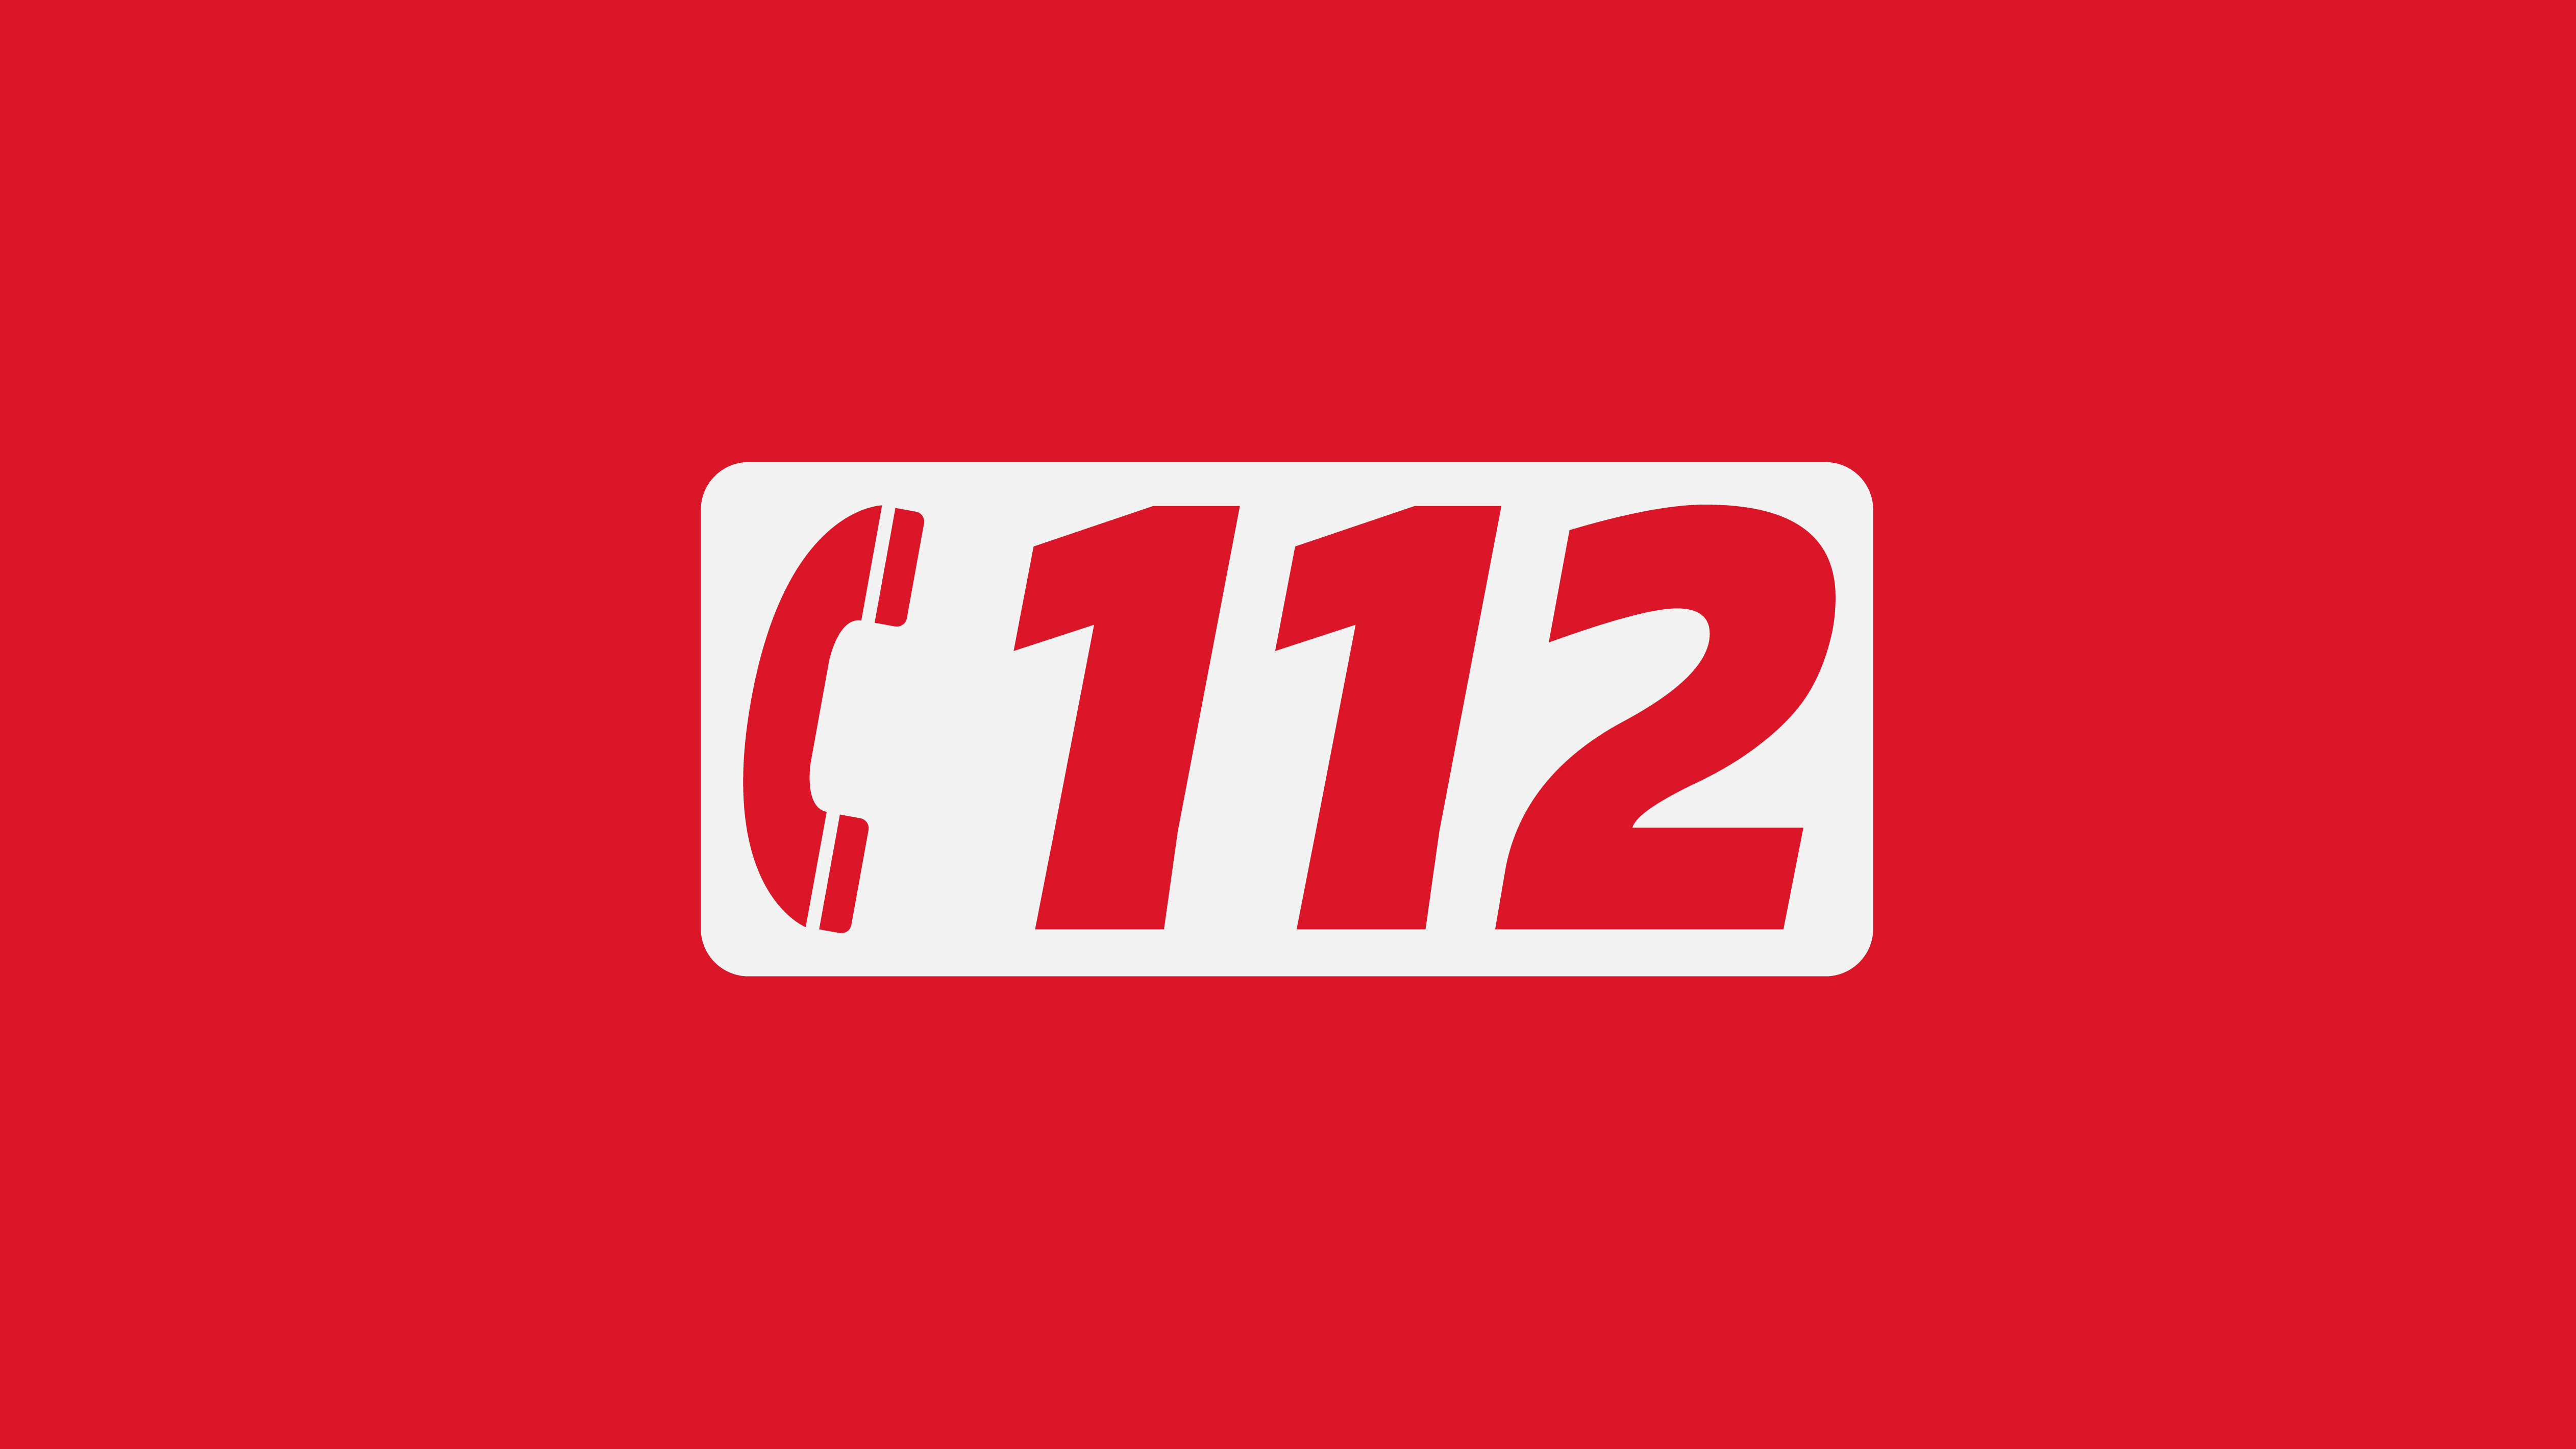 numero-urgence-112-logo-header-f-d-ration-fran-aise-des-t-l-coms